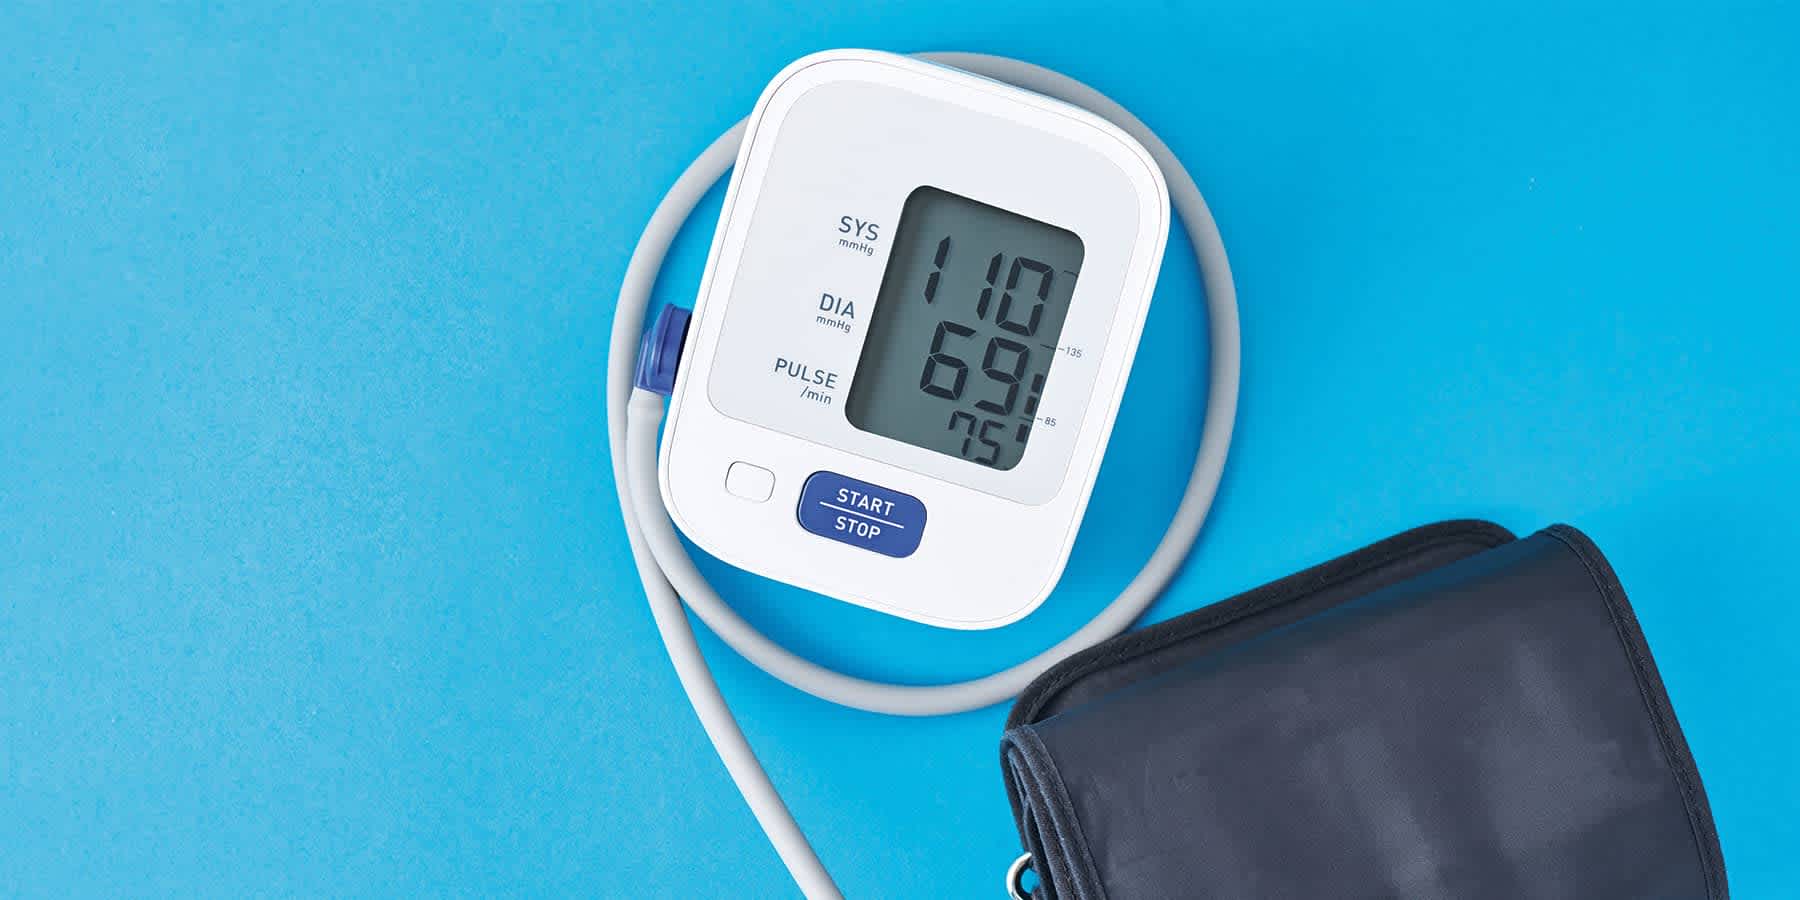 Blood pressure monitor to help keep heart healthy